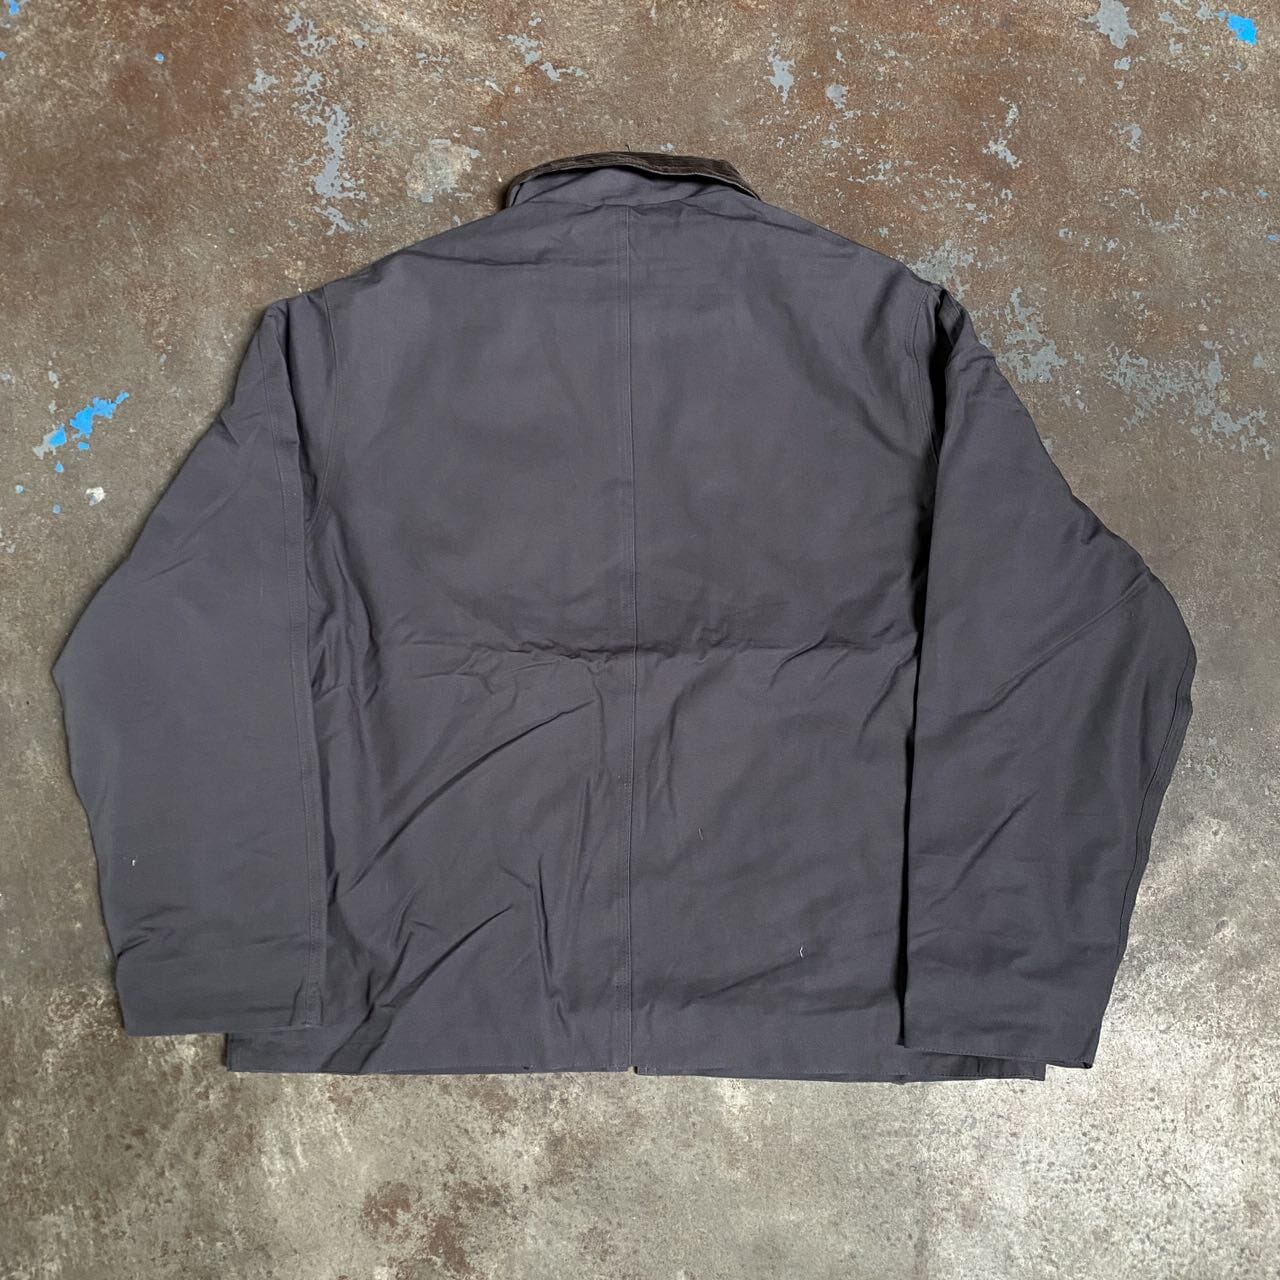 Carhartt Dark Grey Jackets Reworkwear Northern Pole Vintage Wholesale 